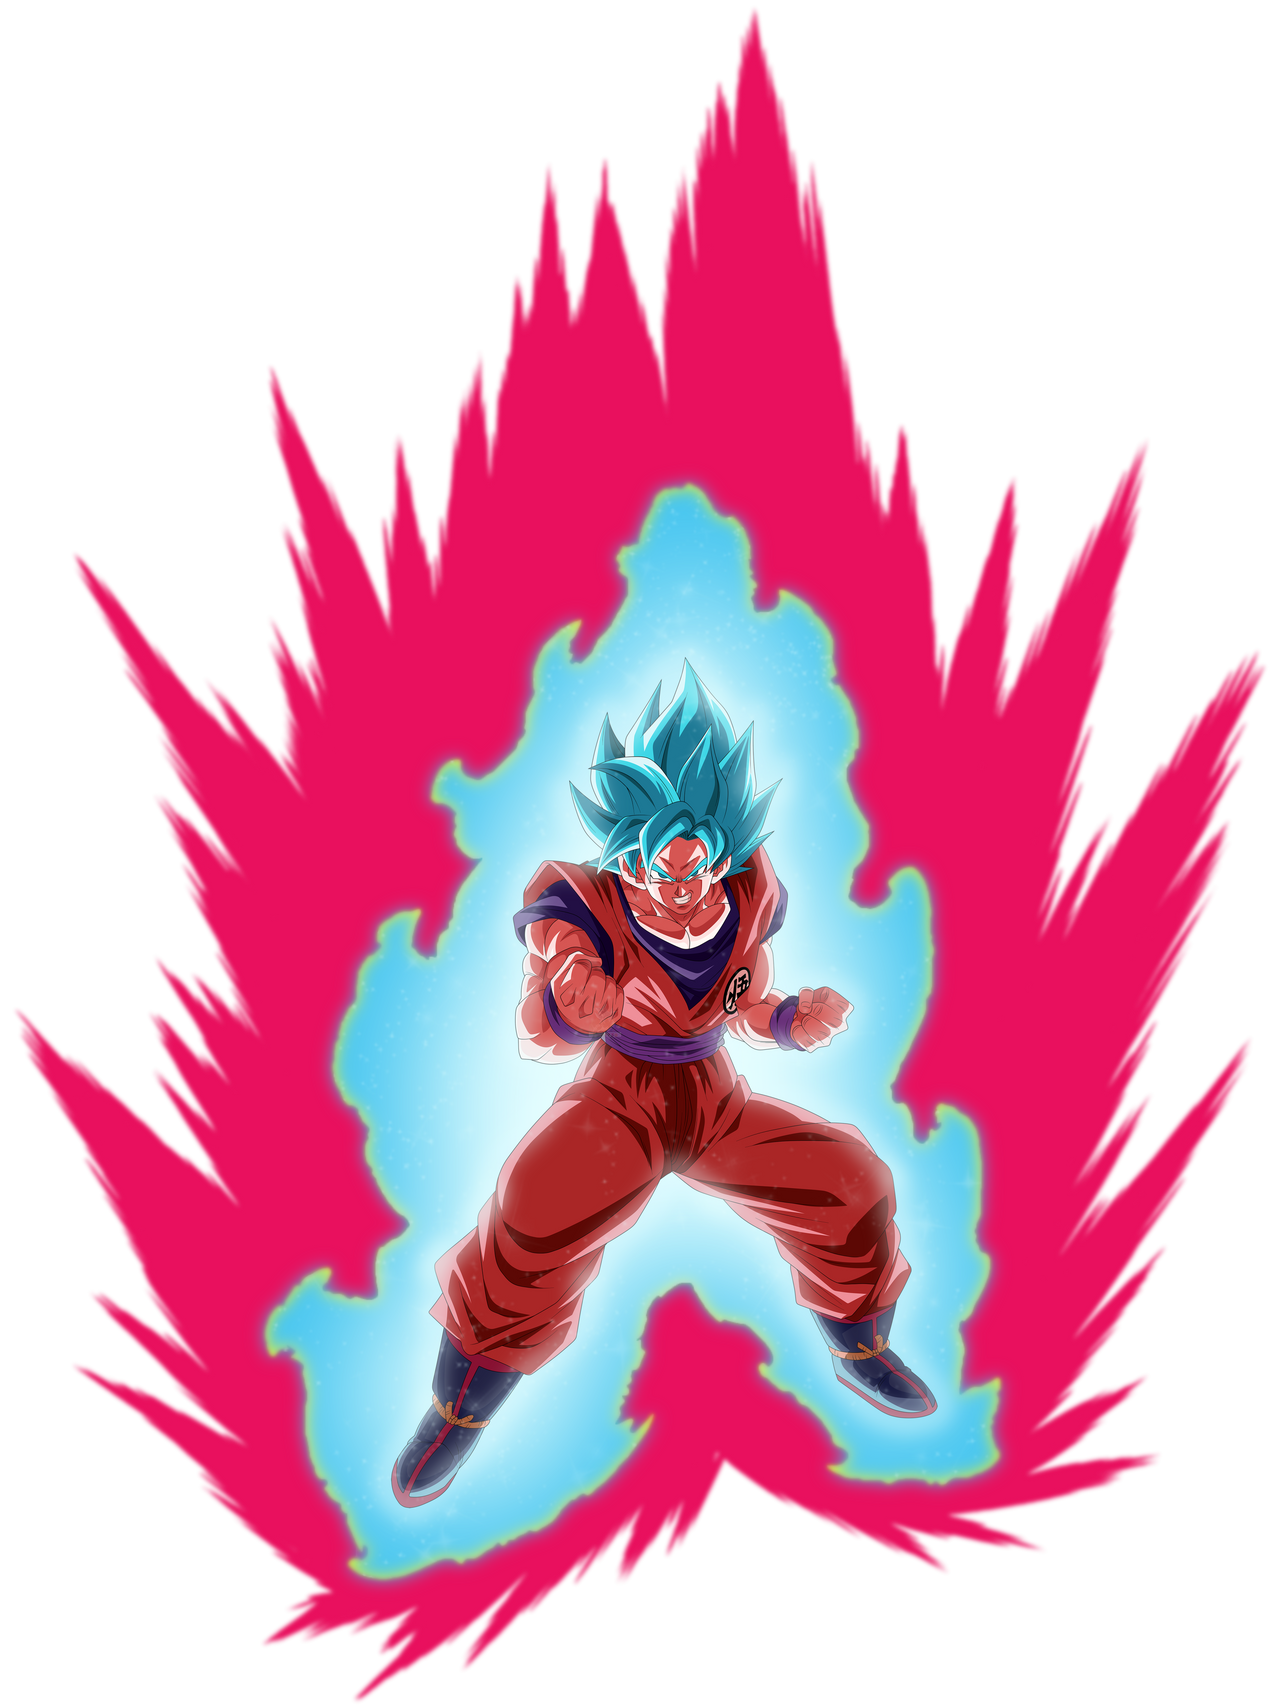 Goku Super Saiyajin 4 by Arbiter720 on DeviantArt